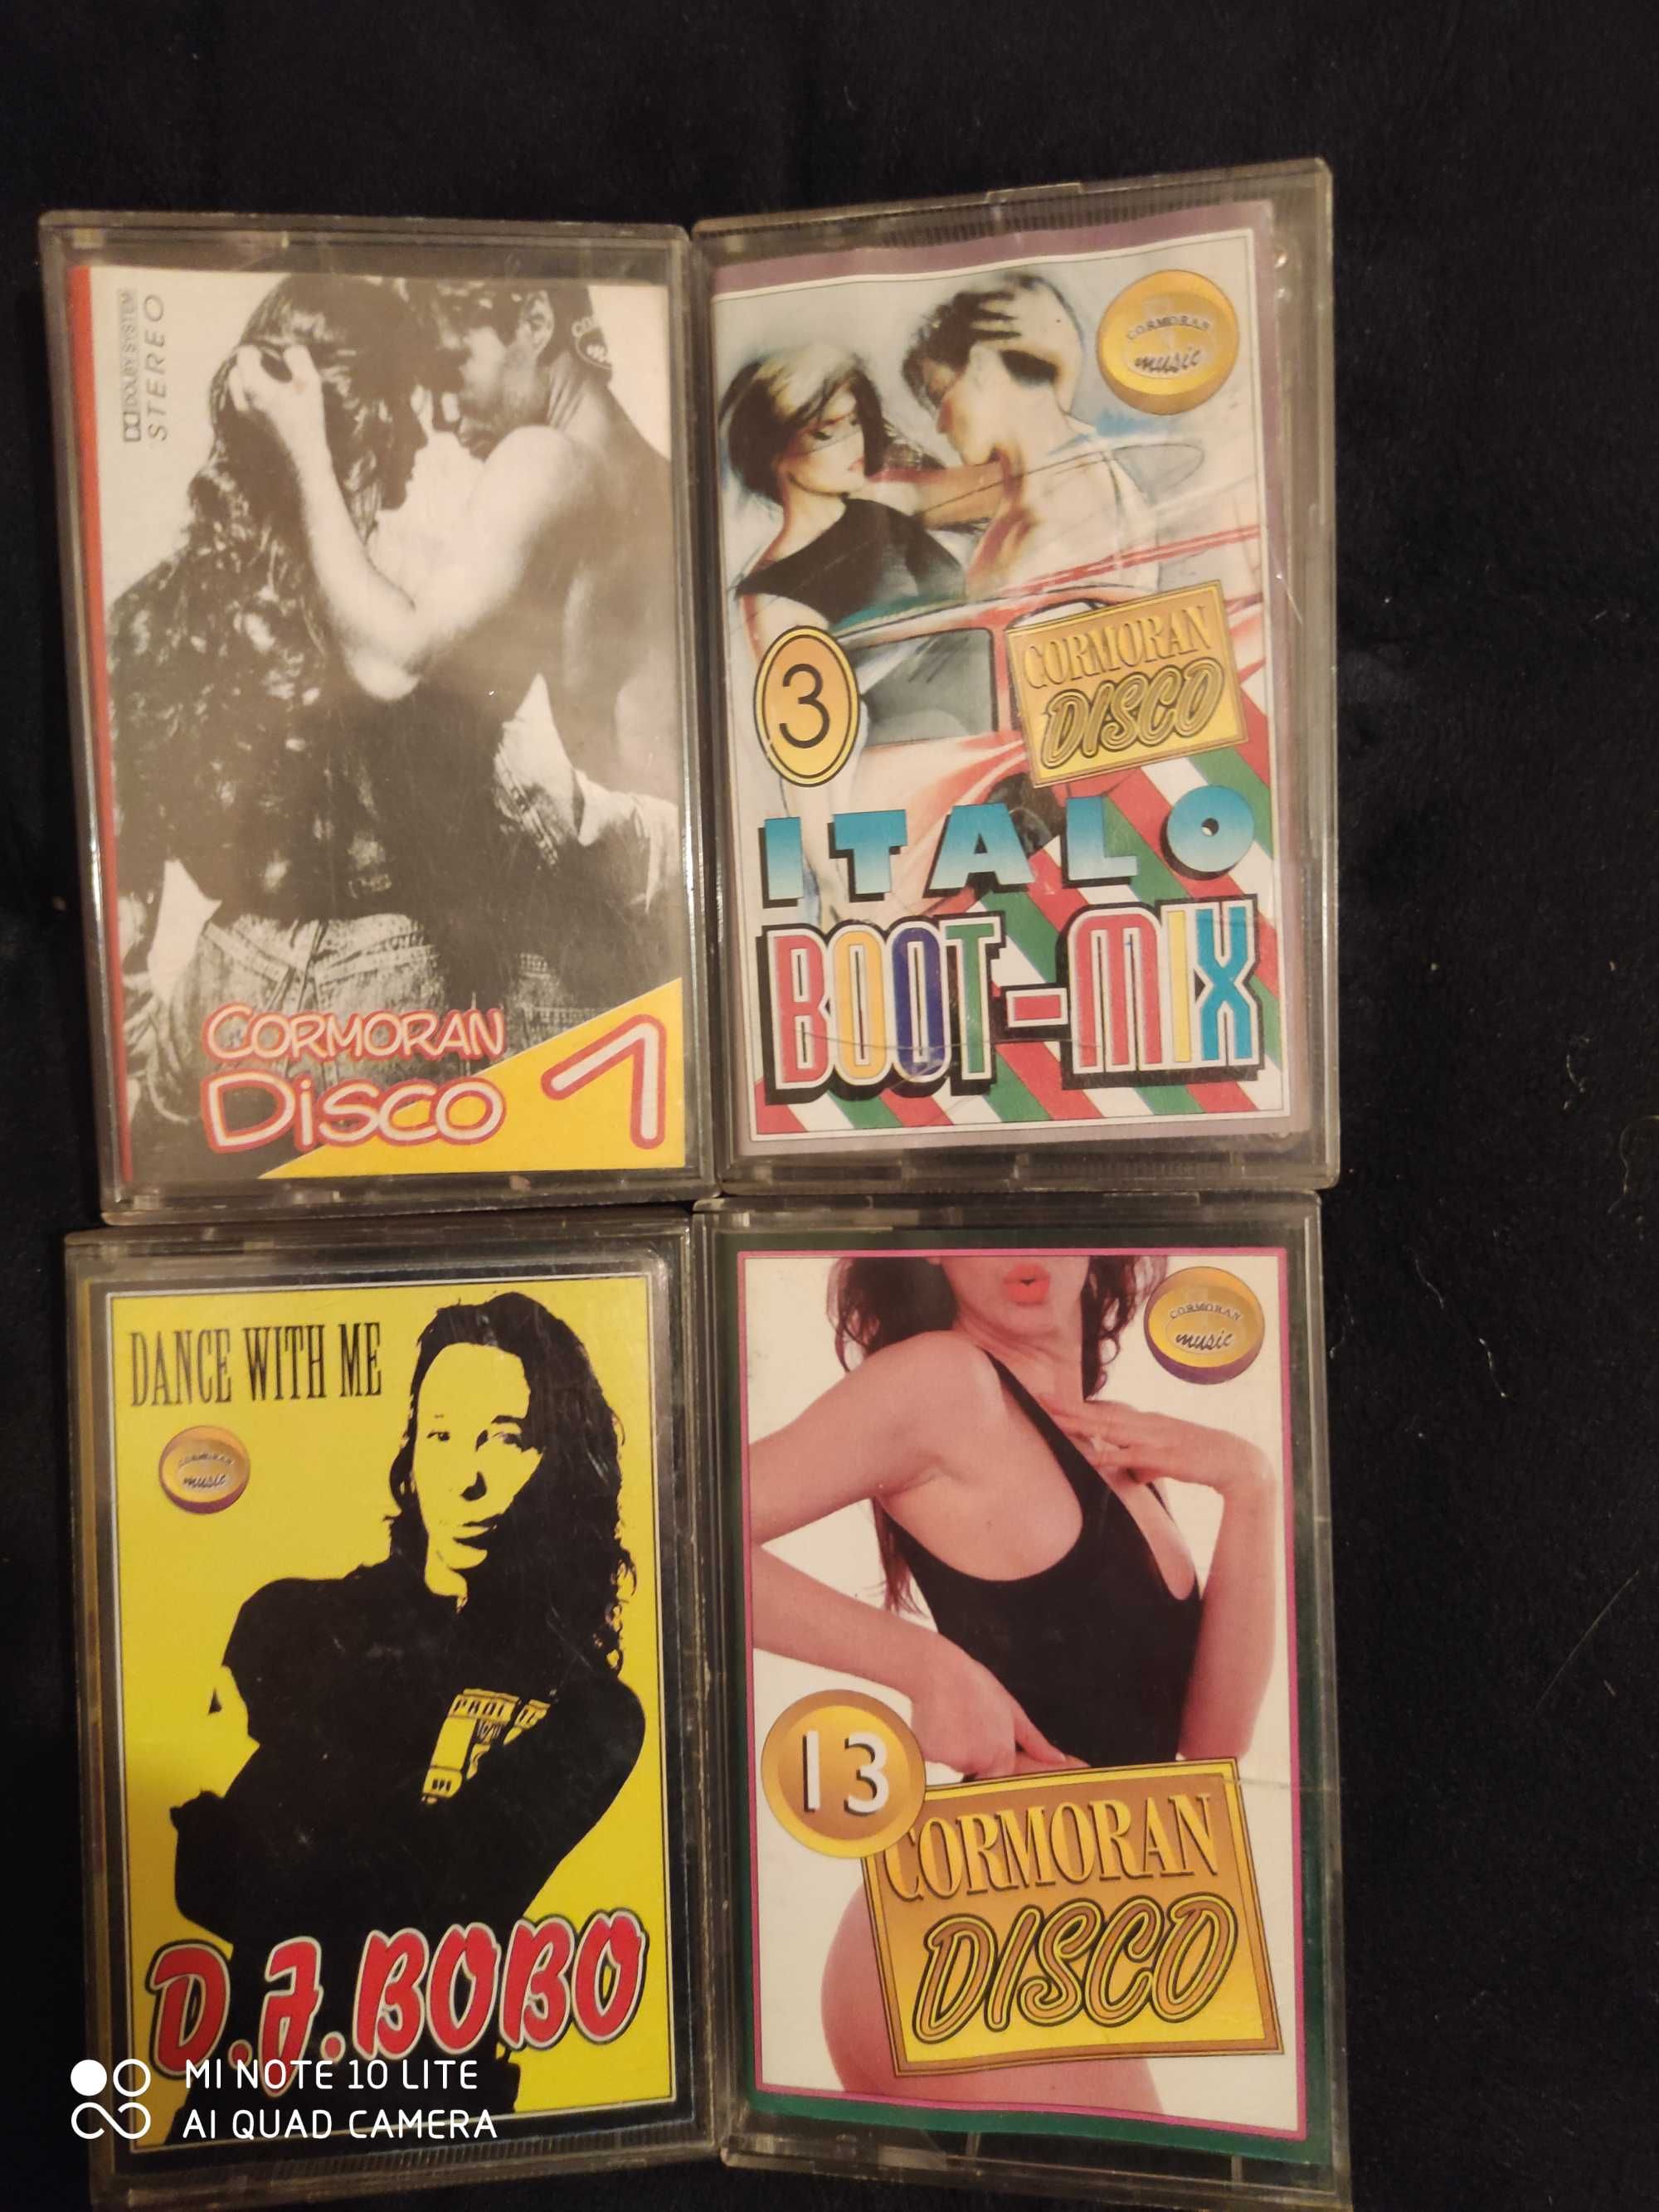 Disco Cormoran zestaw 4 kasety